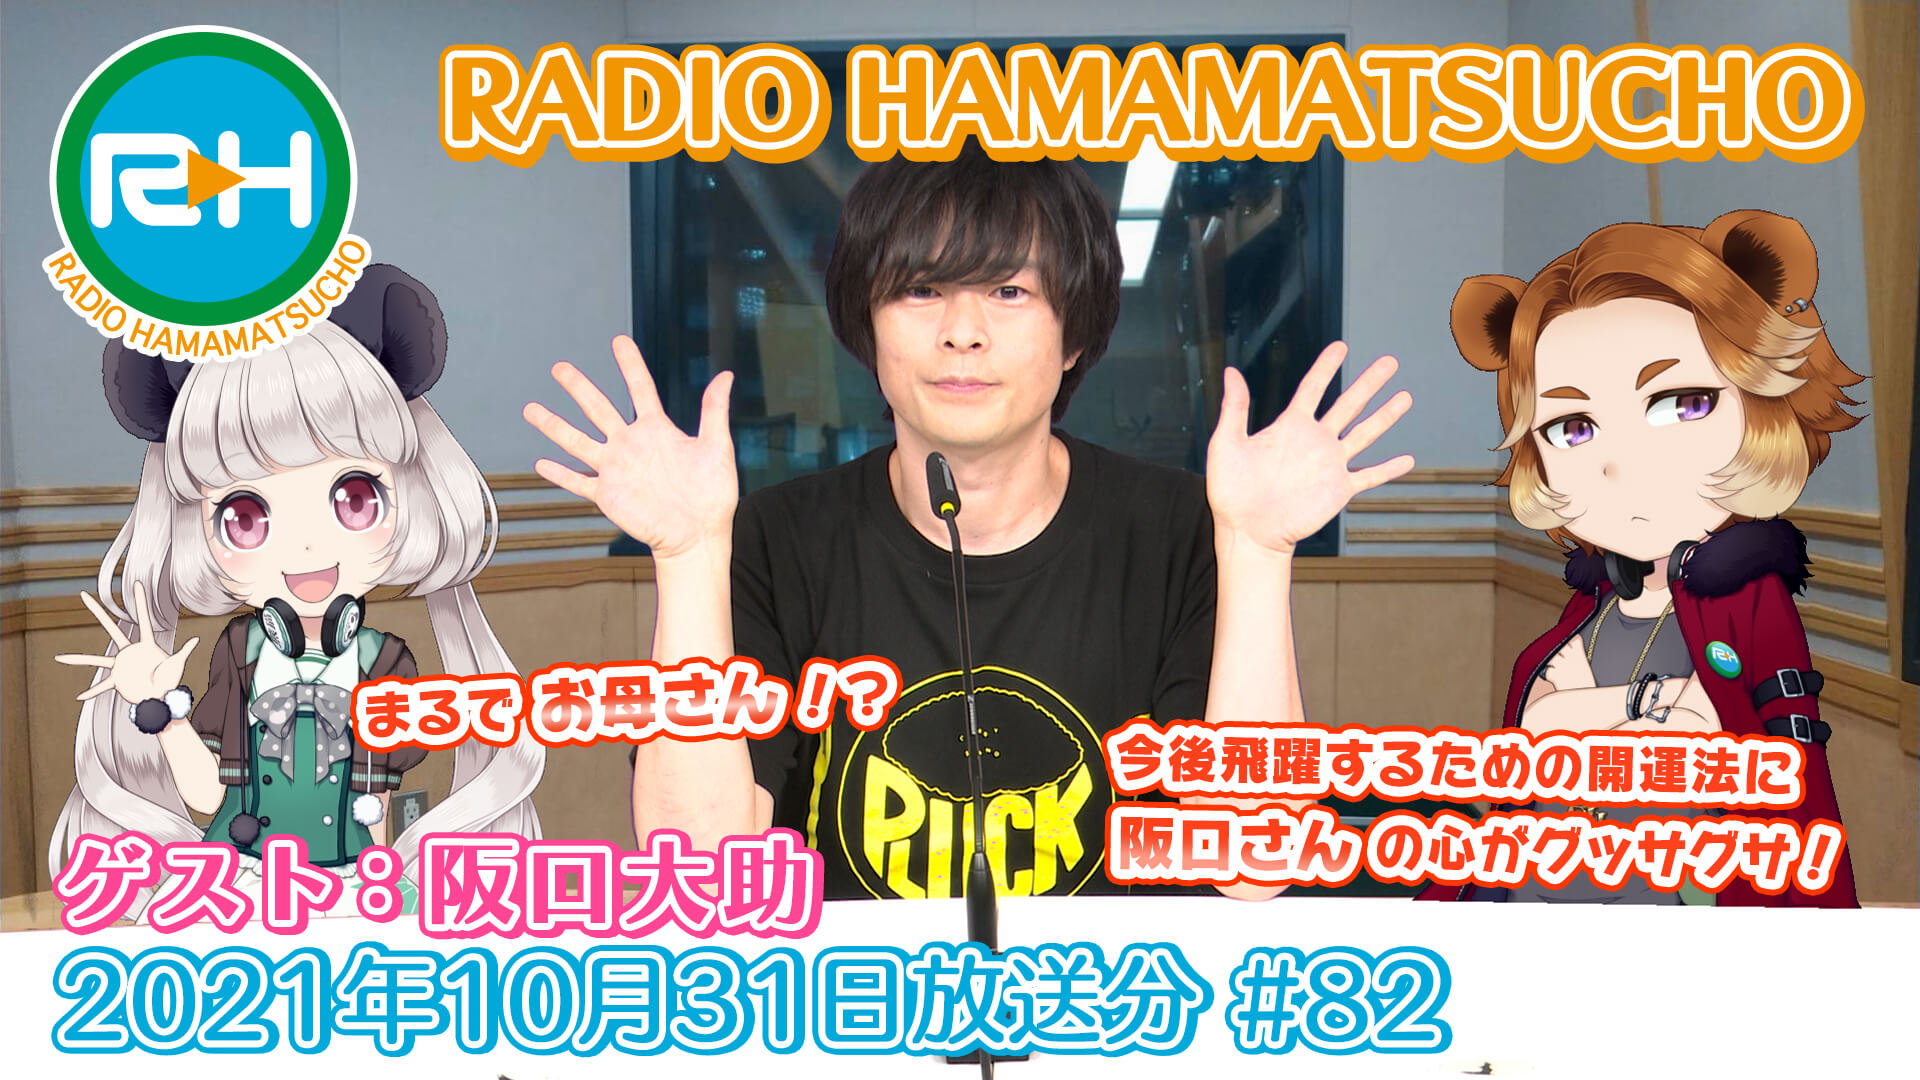 RADIO HAMAMATSUCHO 第82回 (2021年10月31日放送分) ゲスト: 阪口大助